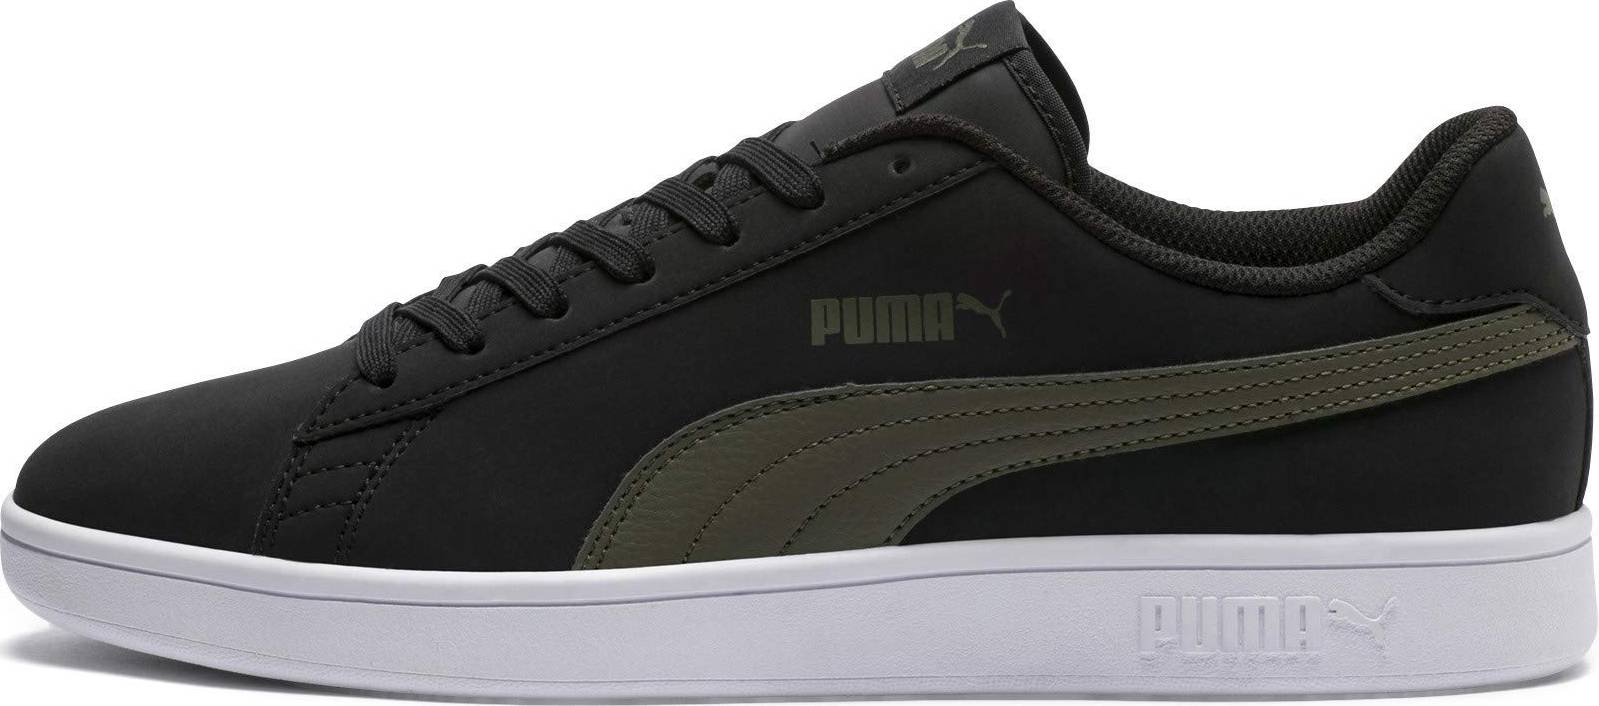 صور غسل اليدين Puma Smash v2 Buck sneakers in black + blue (only $44) | RunRepeat صور غسل اليدين